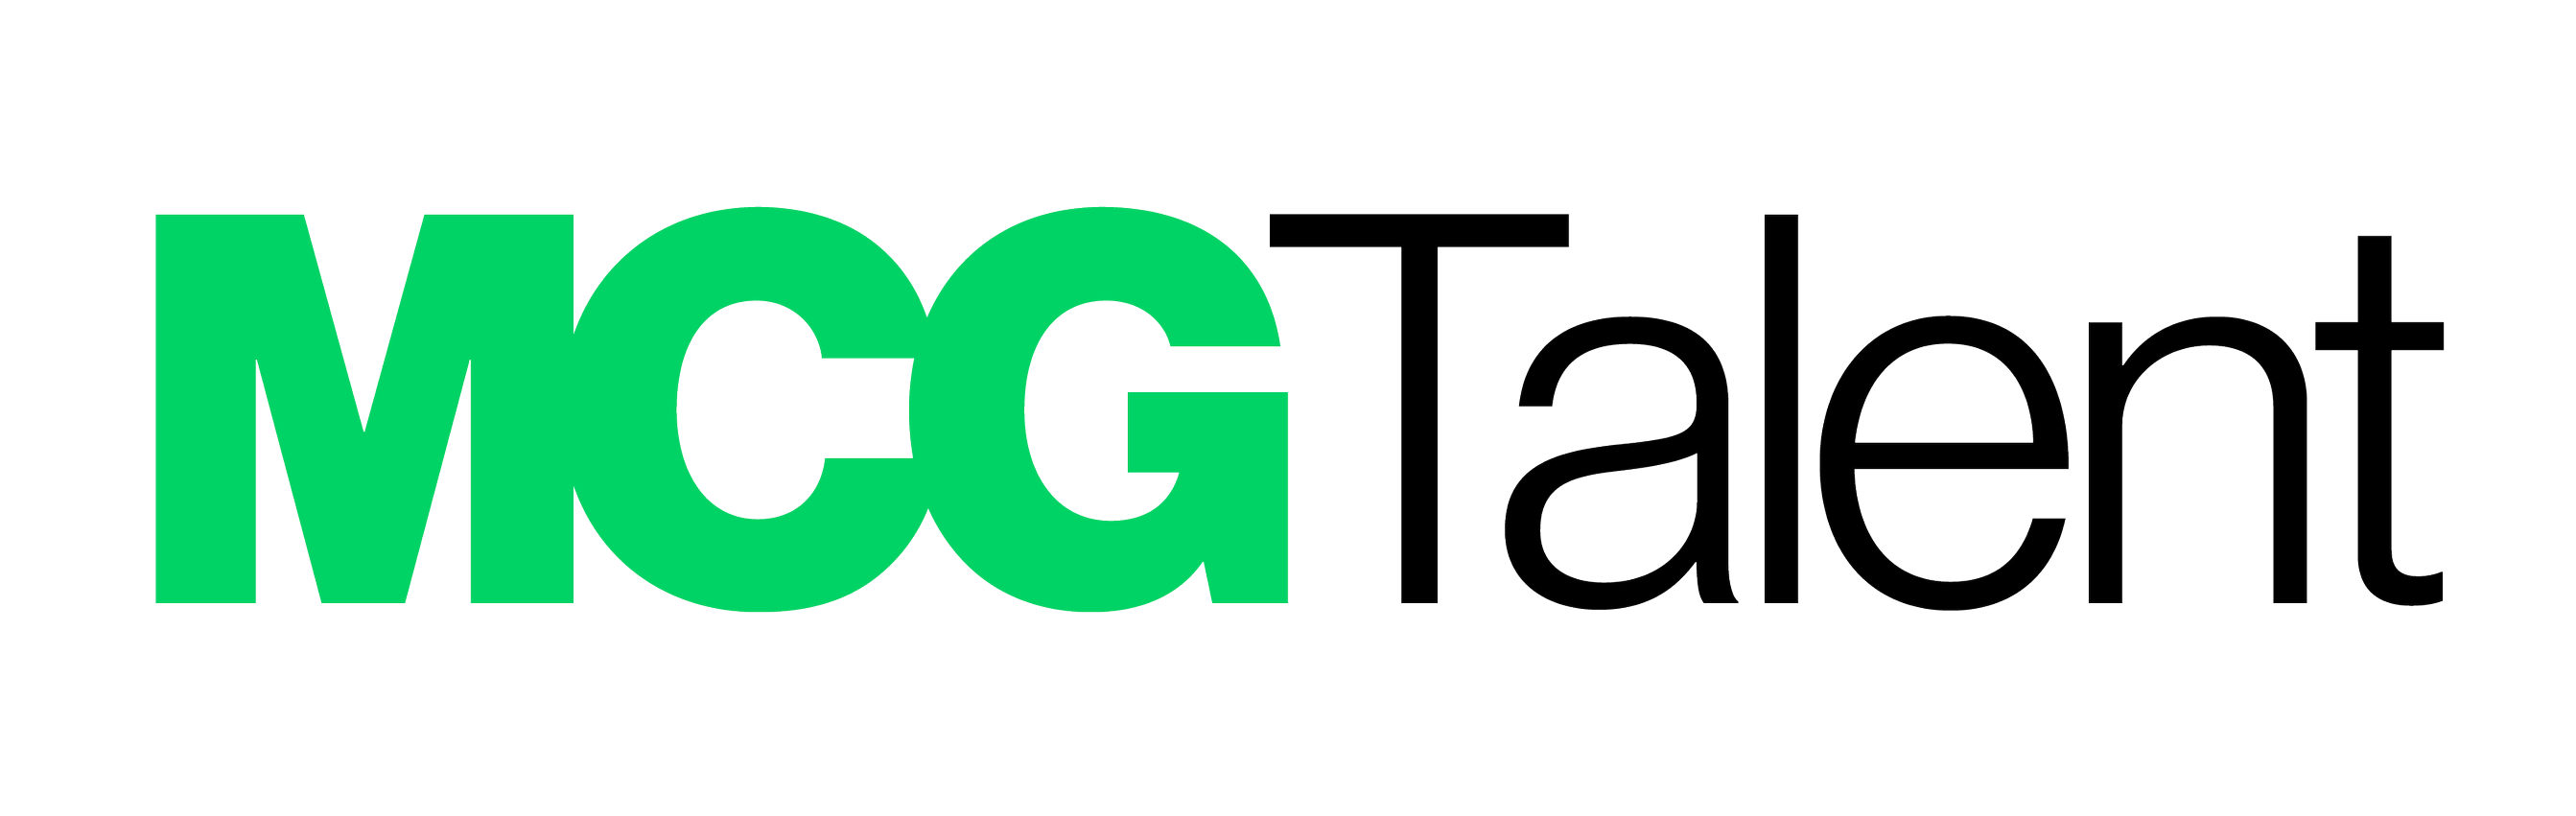 MCG Talent logo